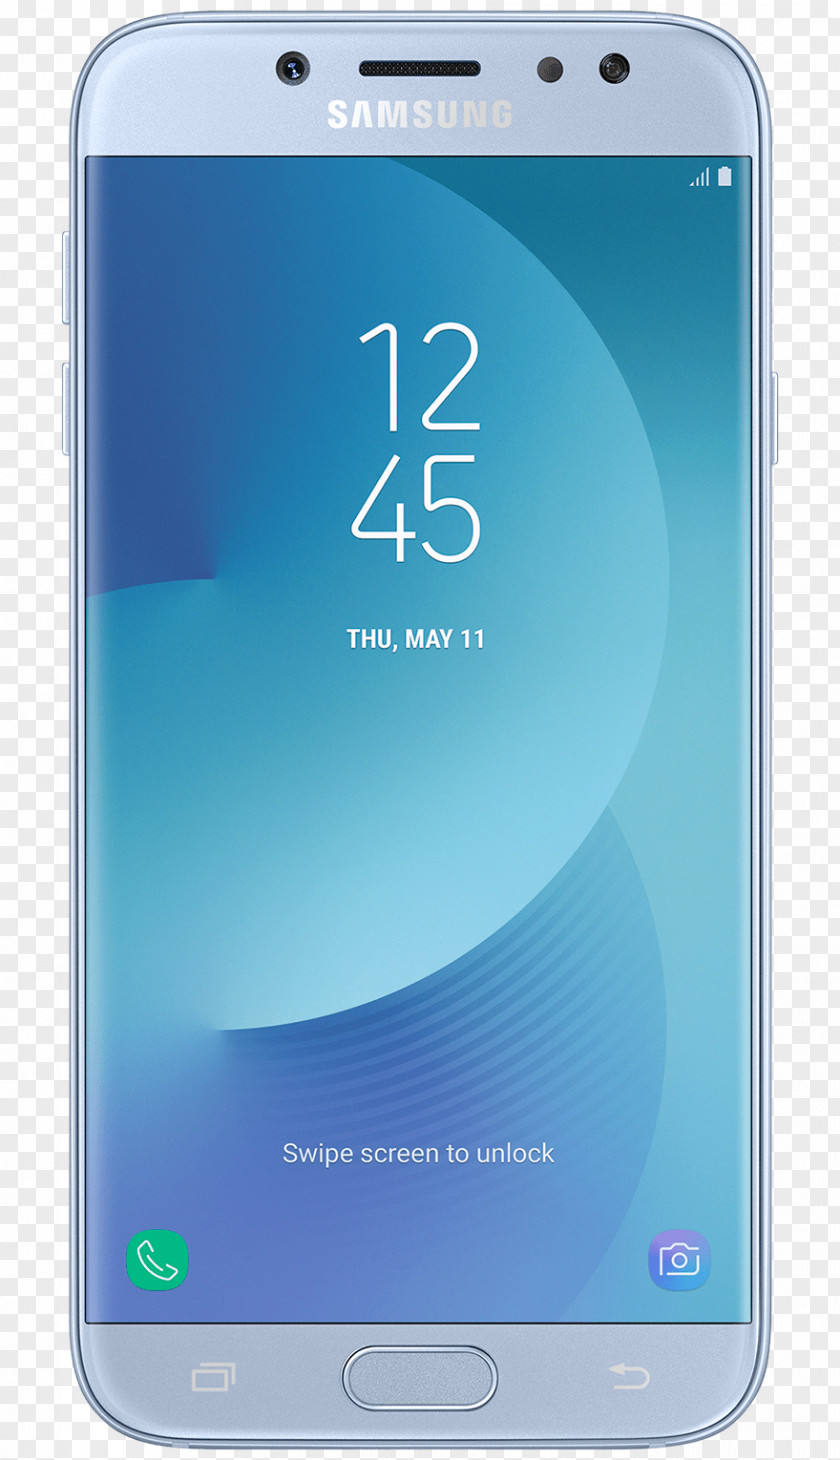 Samsung Galaxy J7 Pro J5 Prime (2016) PNG